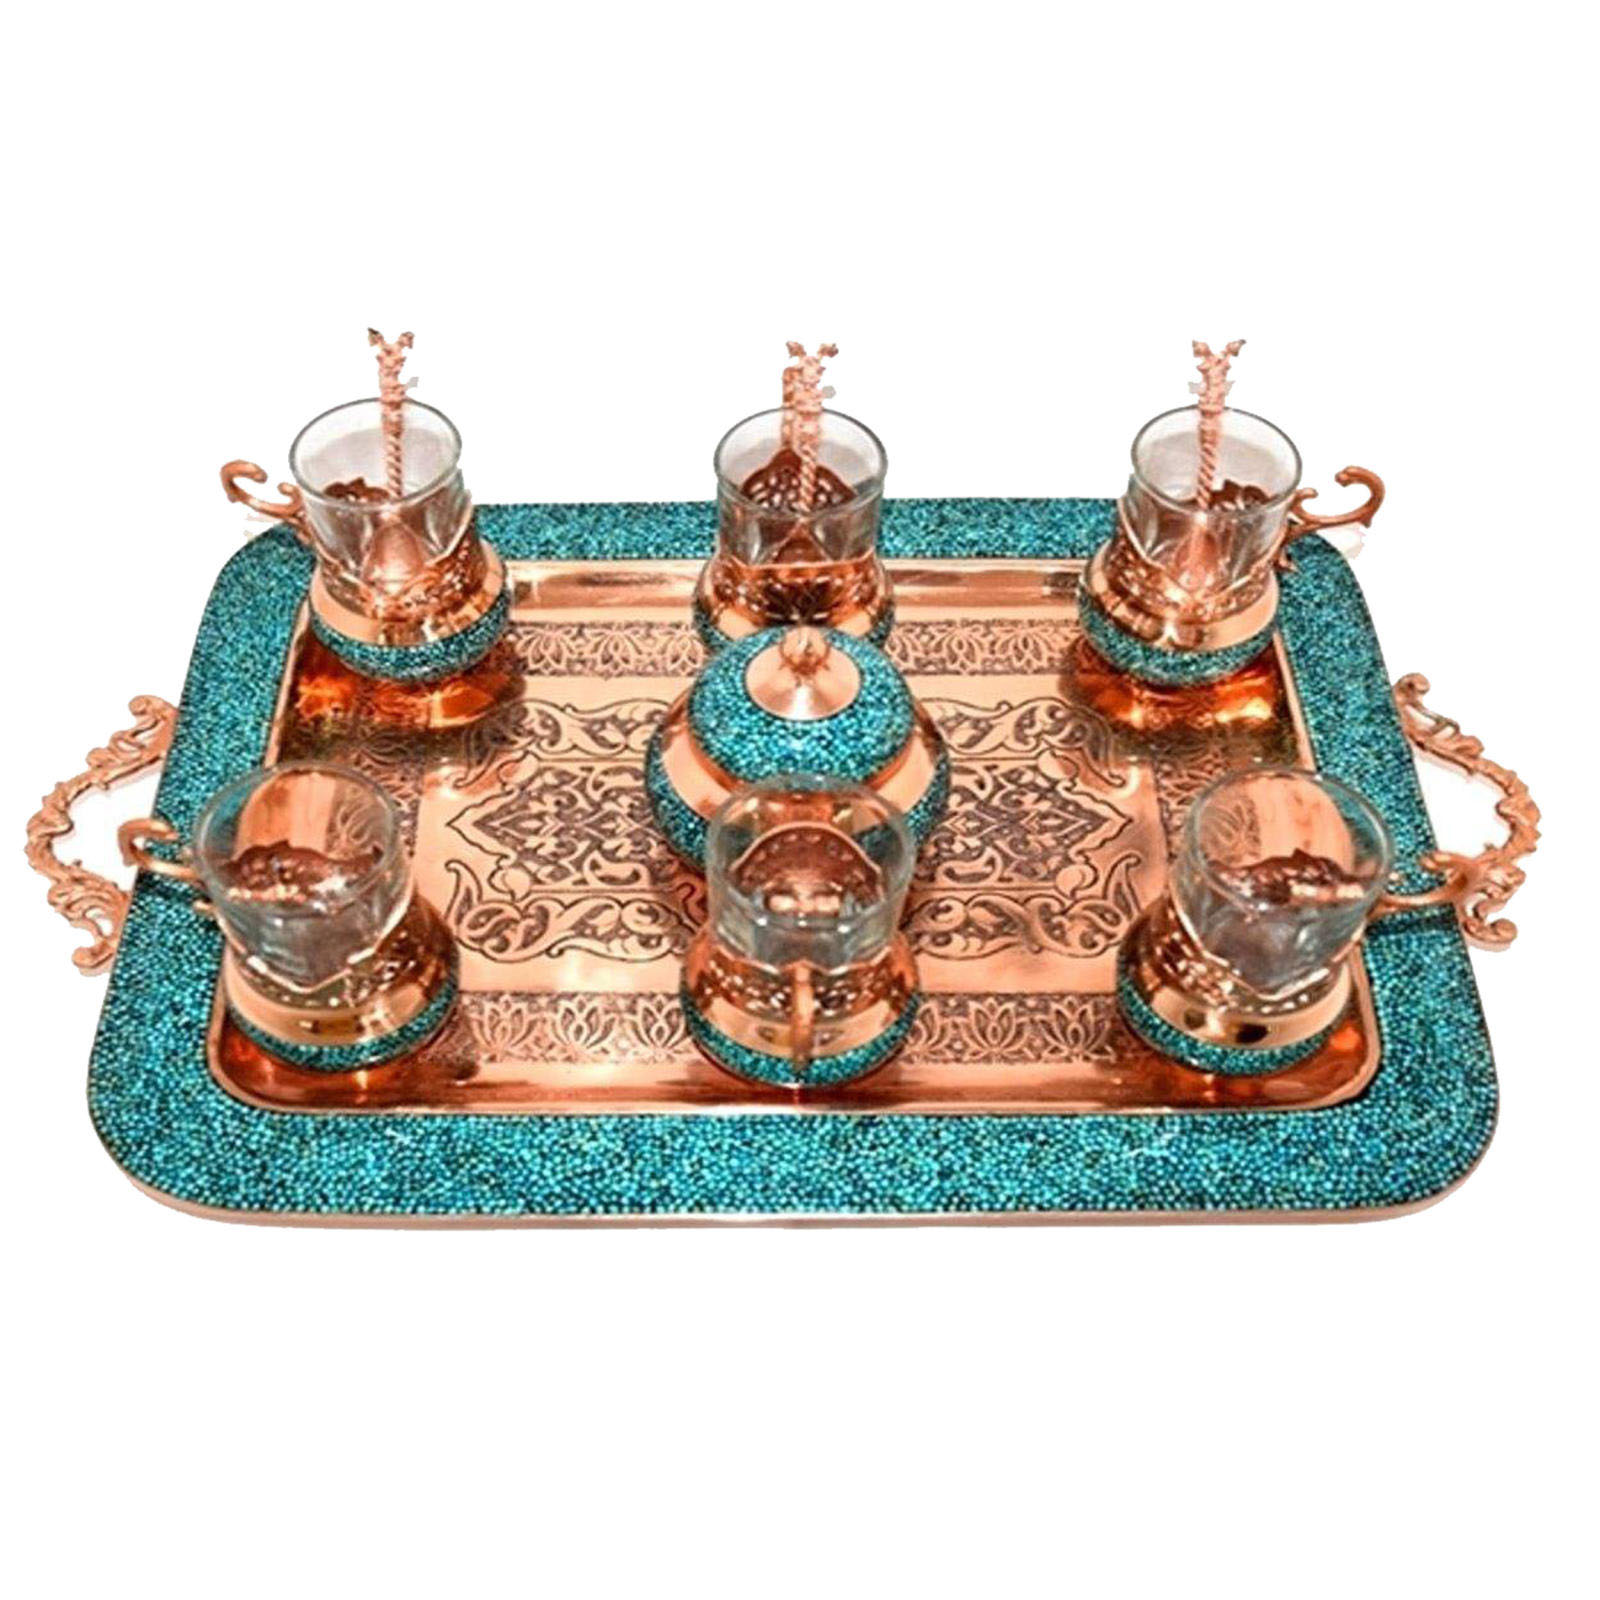 Turquoise inlaying tea service set, 020 Model